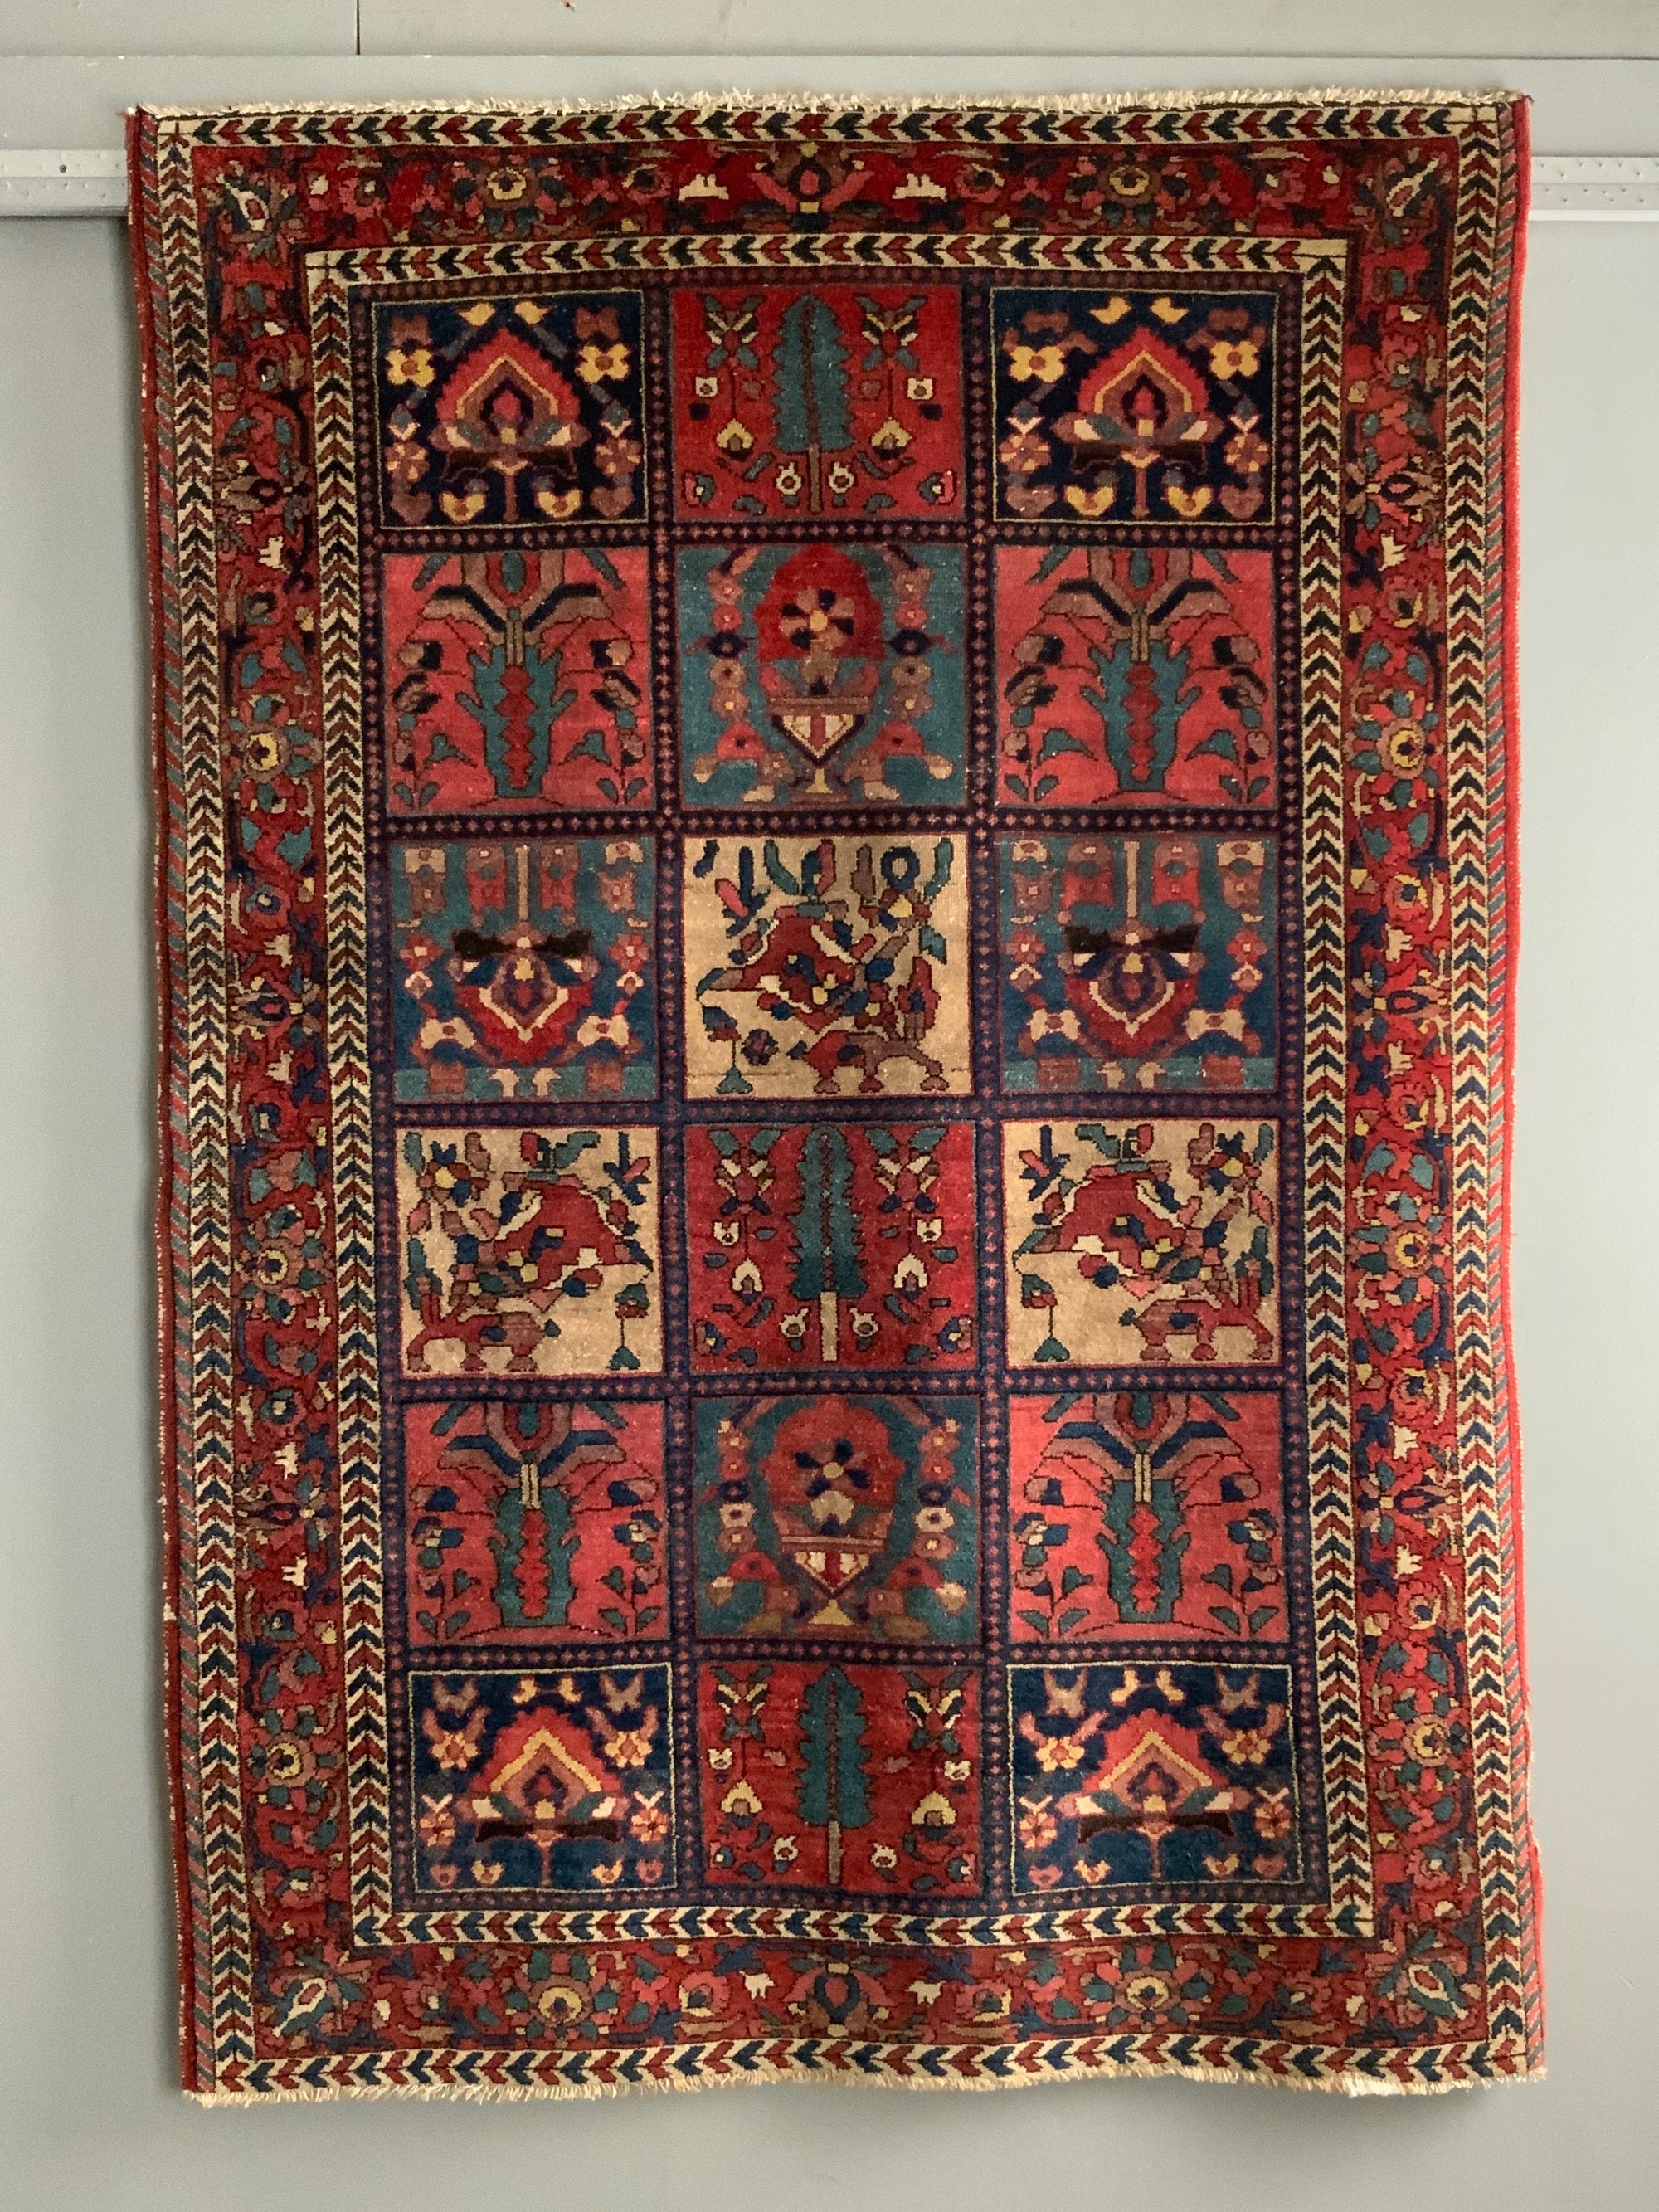 Bactiar rug with compartmental design (196 x 139cm)